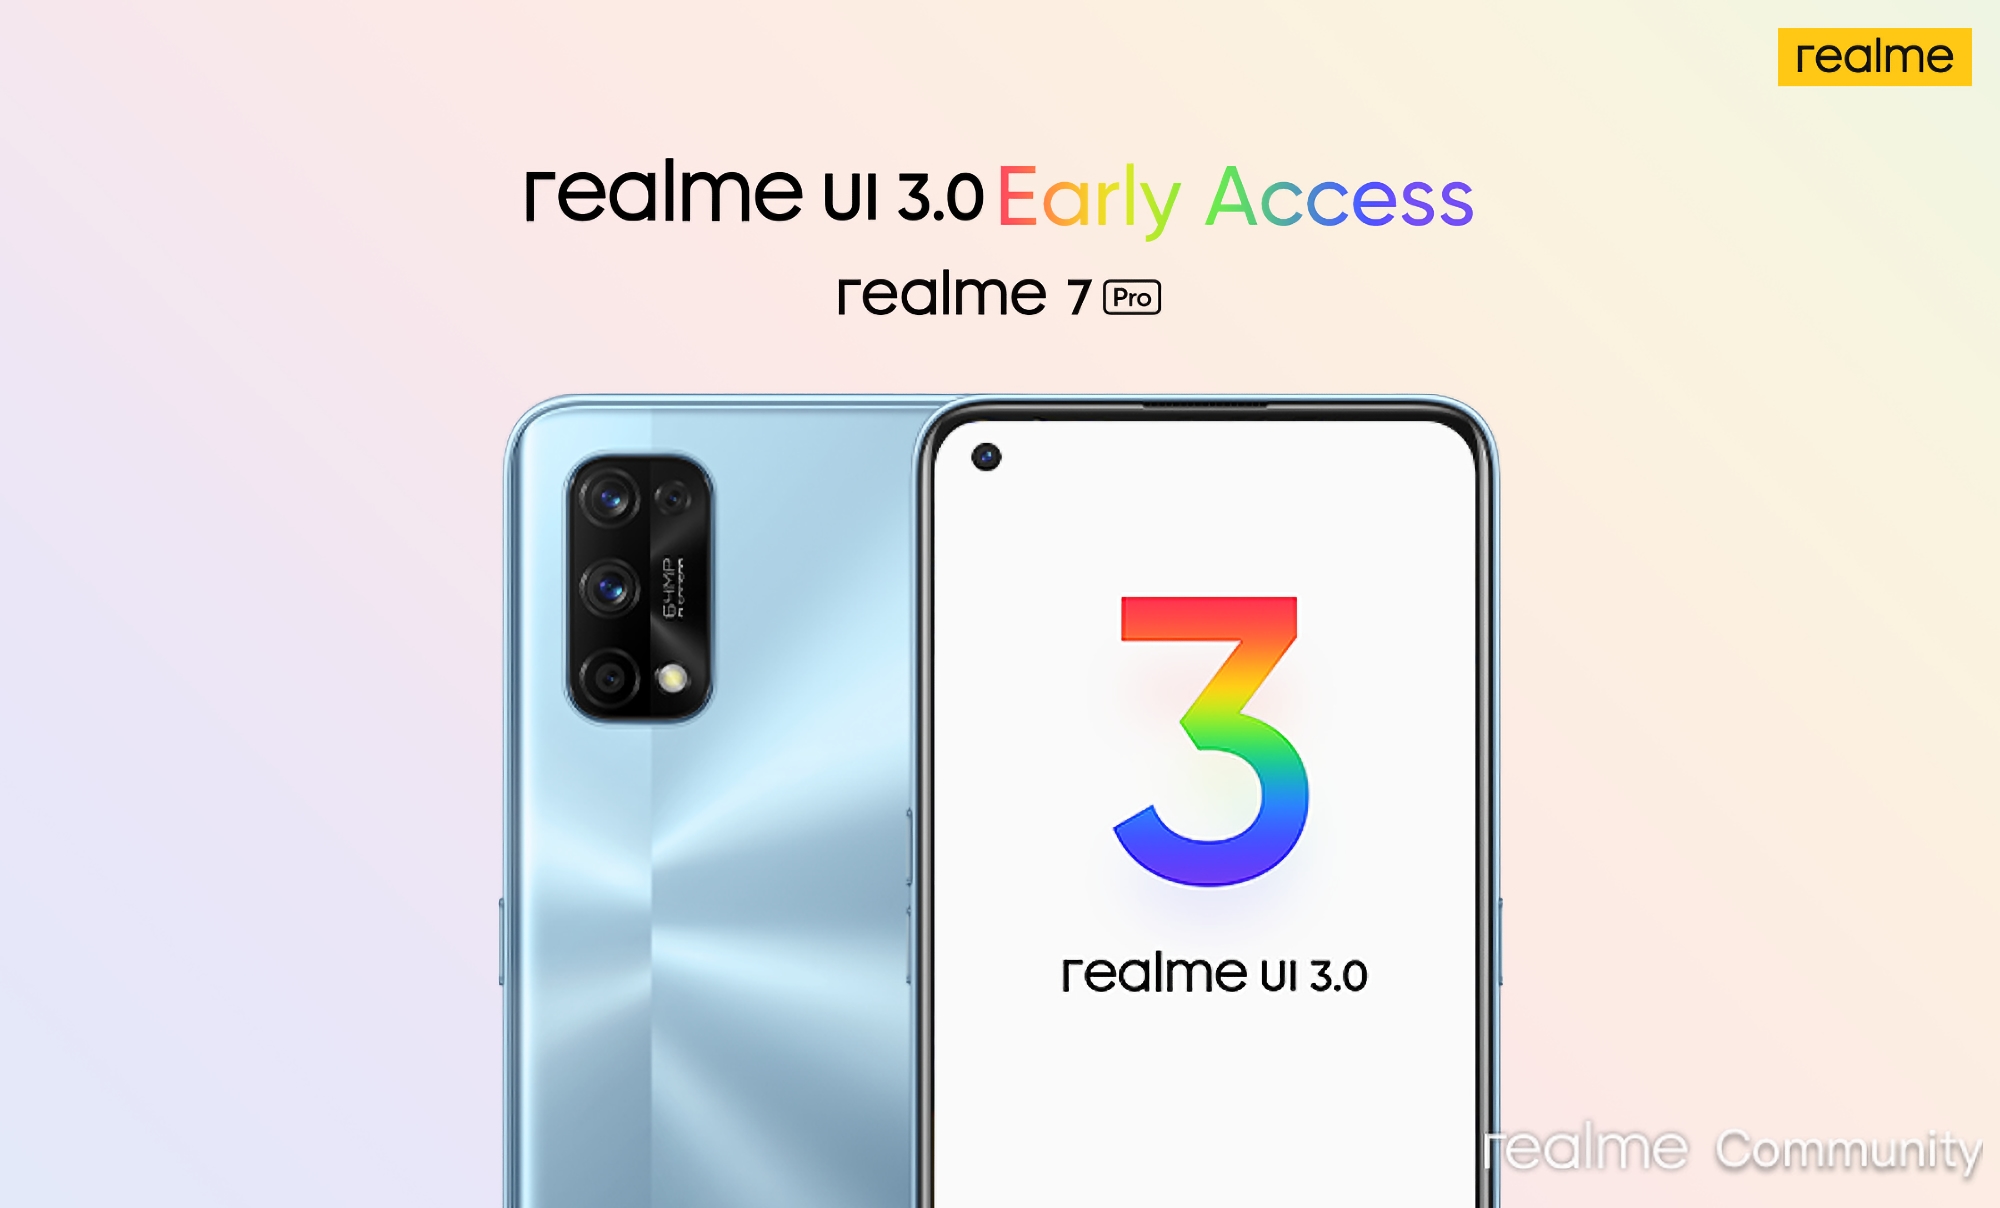 Realme 12 pro россии. Realme gt Master Edition 3.0 UI. Realme gt Master Edition 5g. РЕАЛМИ UI 2.0. Realme UI 3.0.